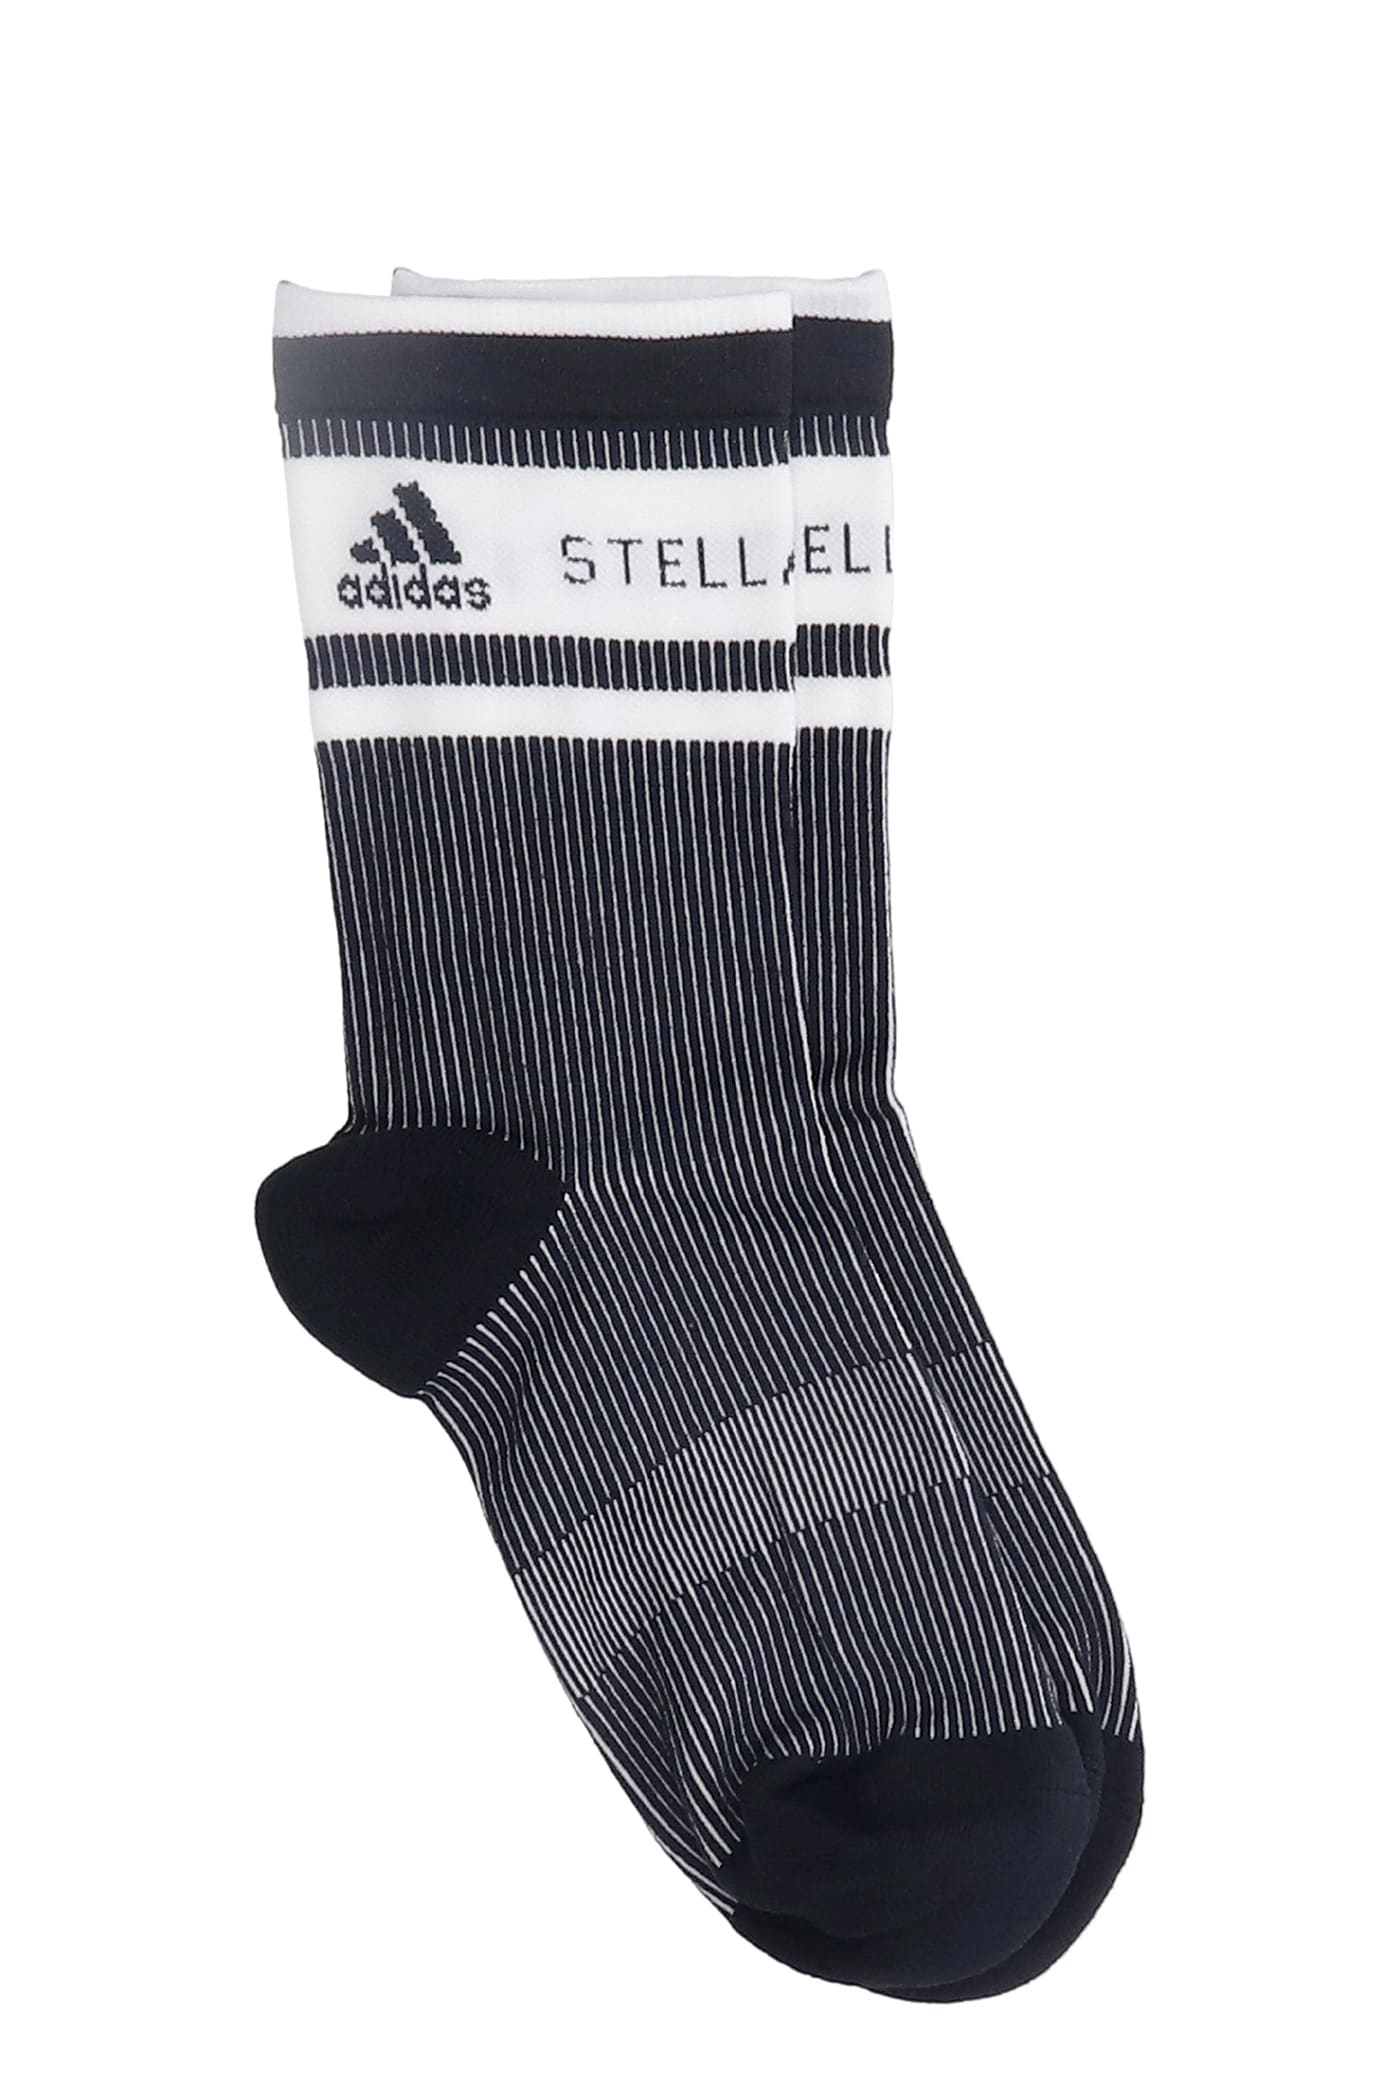 Adidas by Stella McCartney Socks In Black Cotton